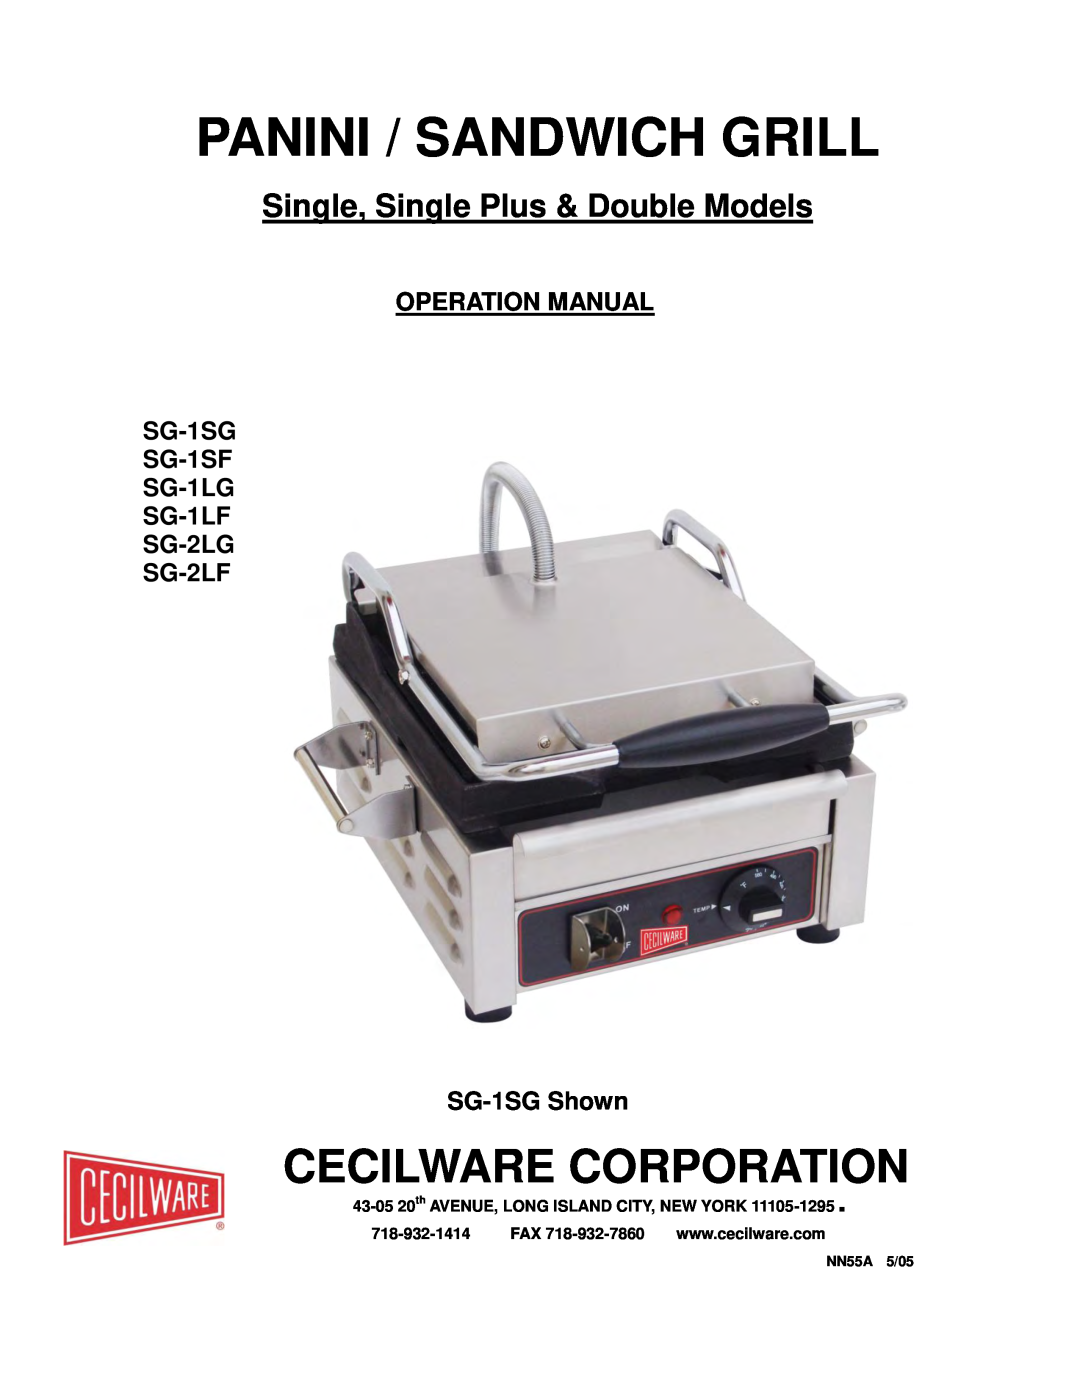 Cecilware SG2LG operation manual Cecilware Corporation, Panini / Sandwich Grill, Single, Single Plus & Double Models 